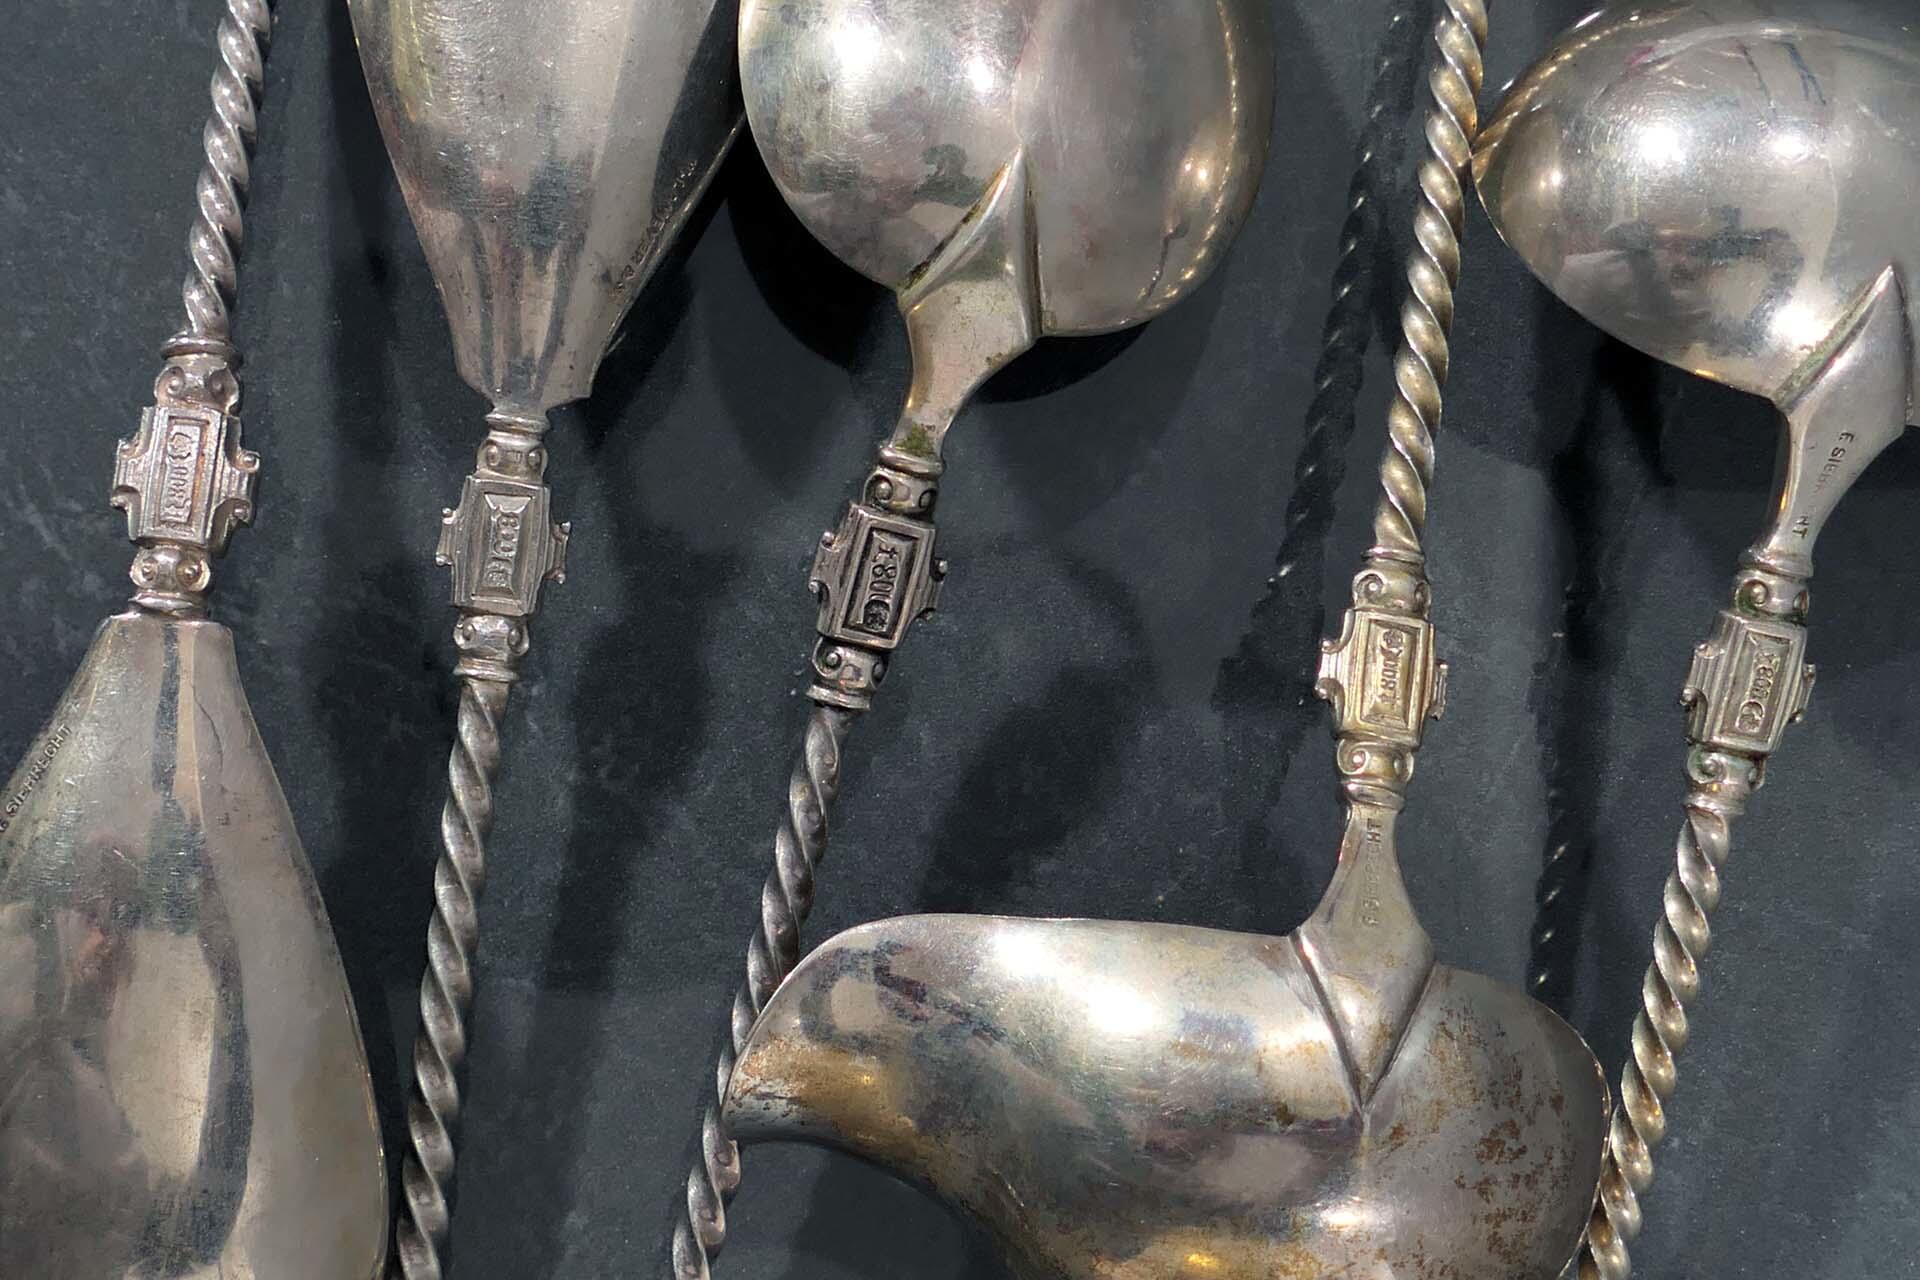 5 tlg. Vorlegebesteckset, prächtiger Historismus, um 1900, 800er Silber massiv, partiell schön erha - Image 5 of 5